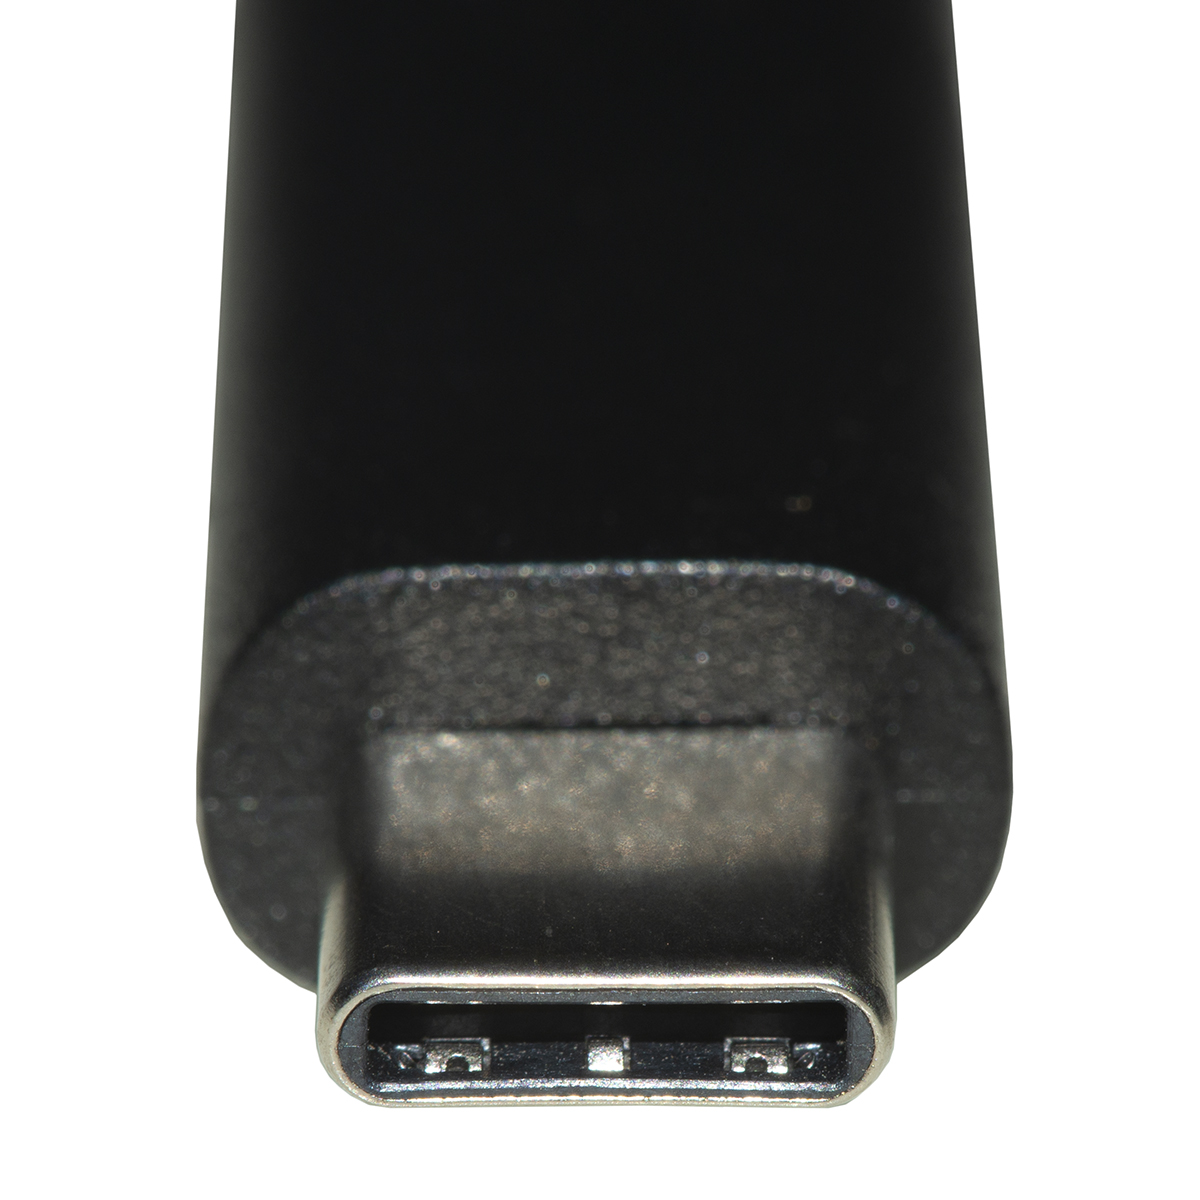 CAVO USB 2.0 USB-C® MASCHIO/MASCHIO MT 0,3 BIANCO